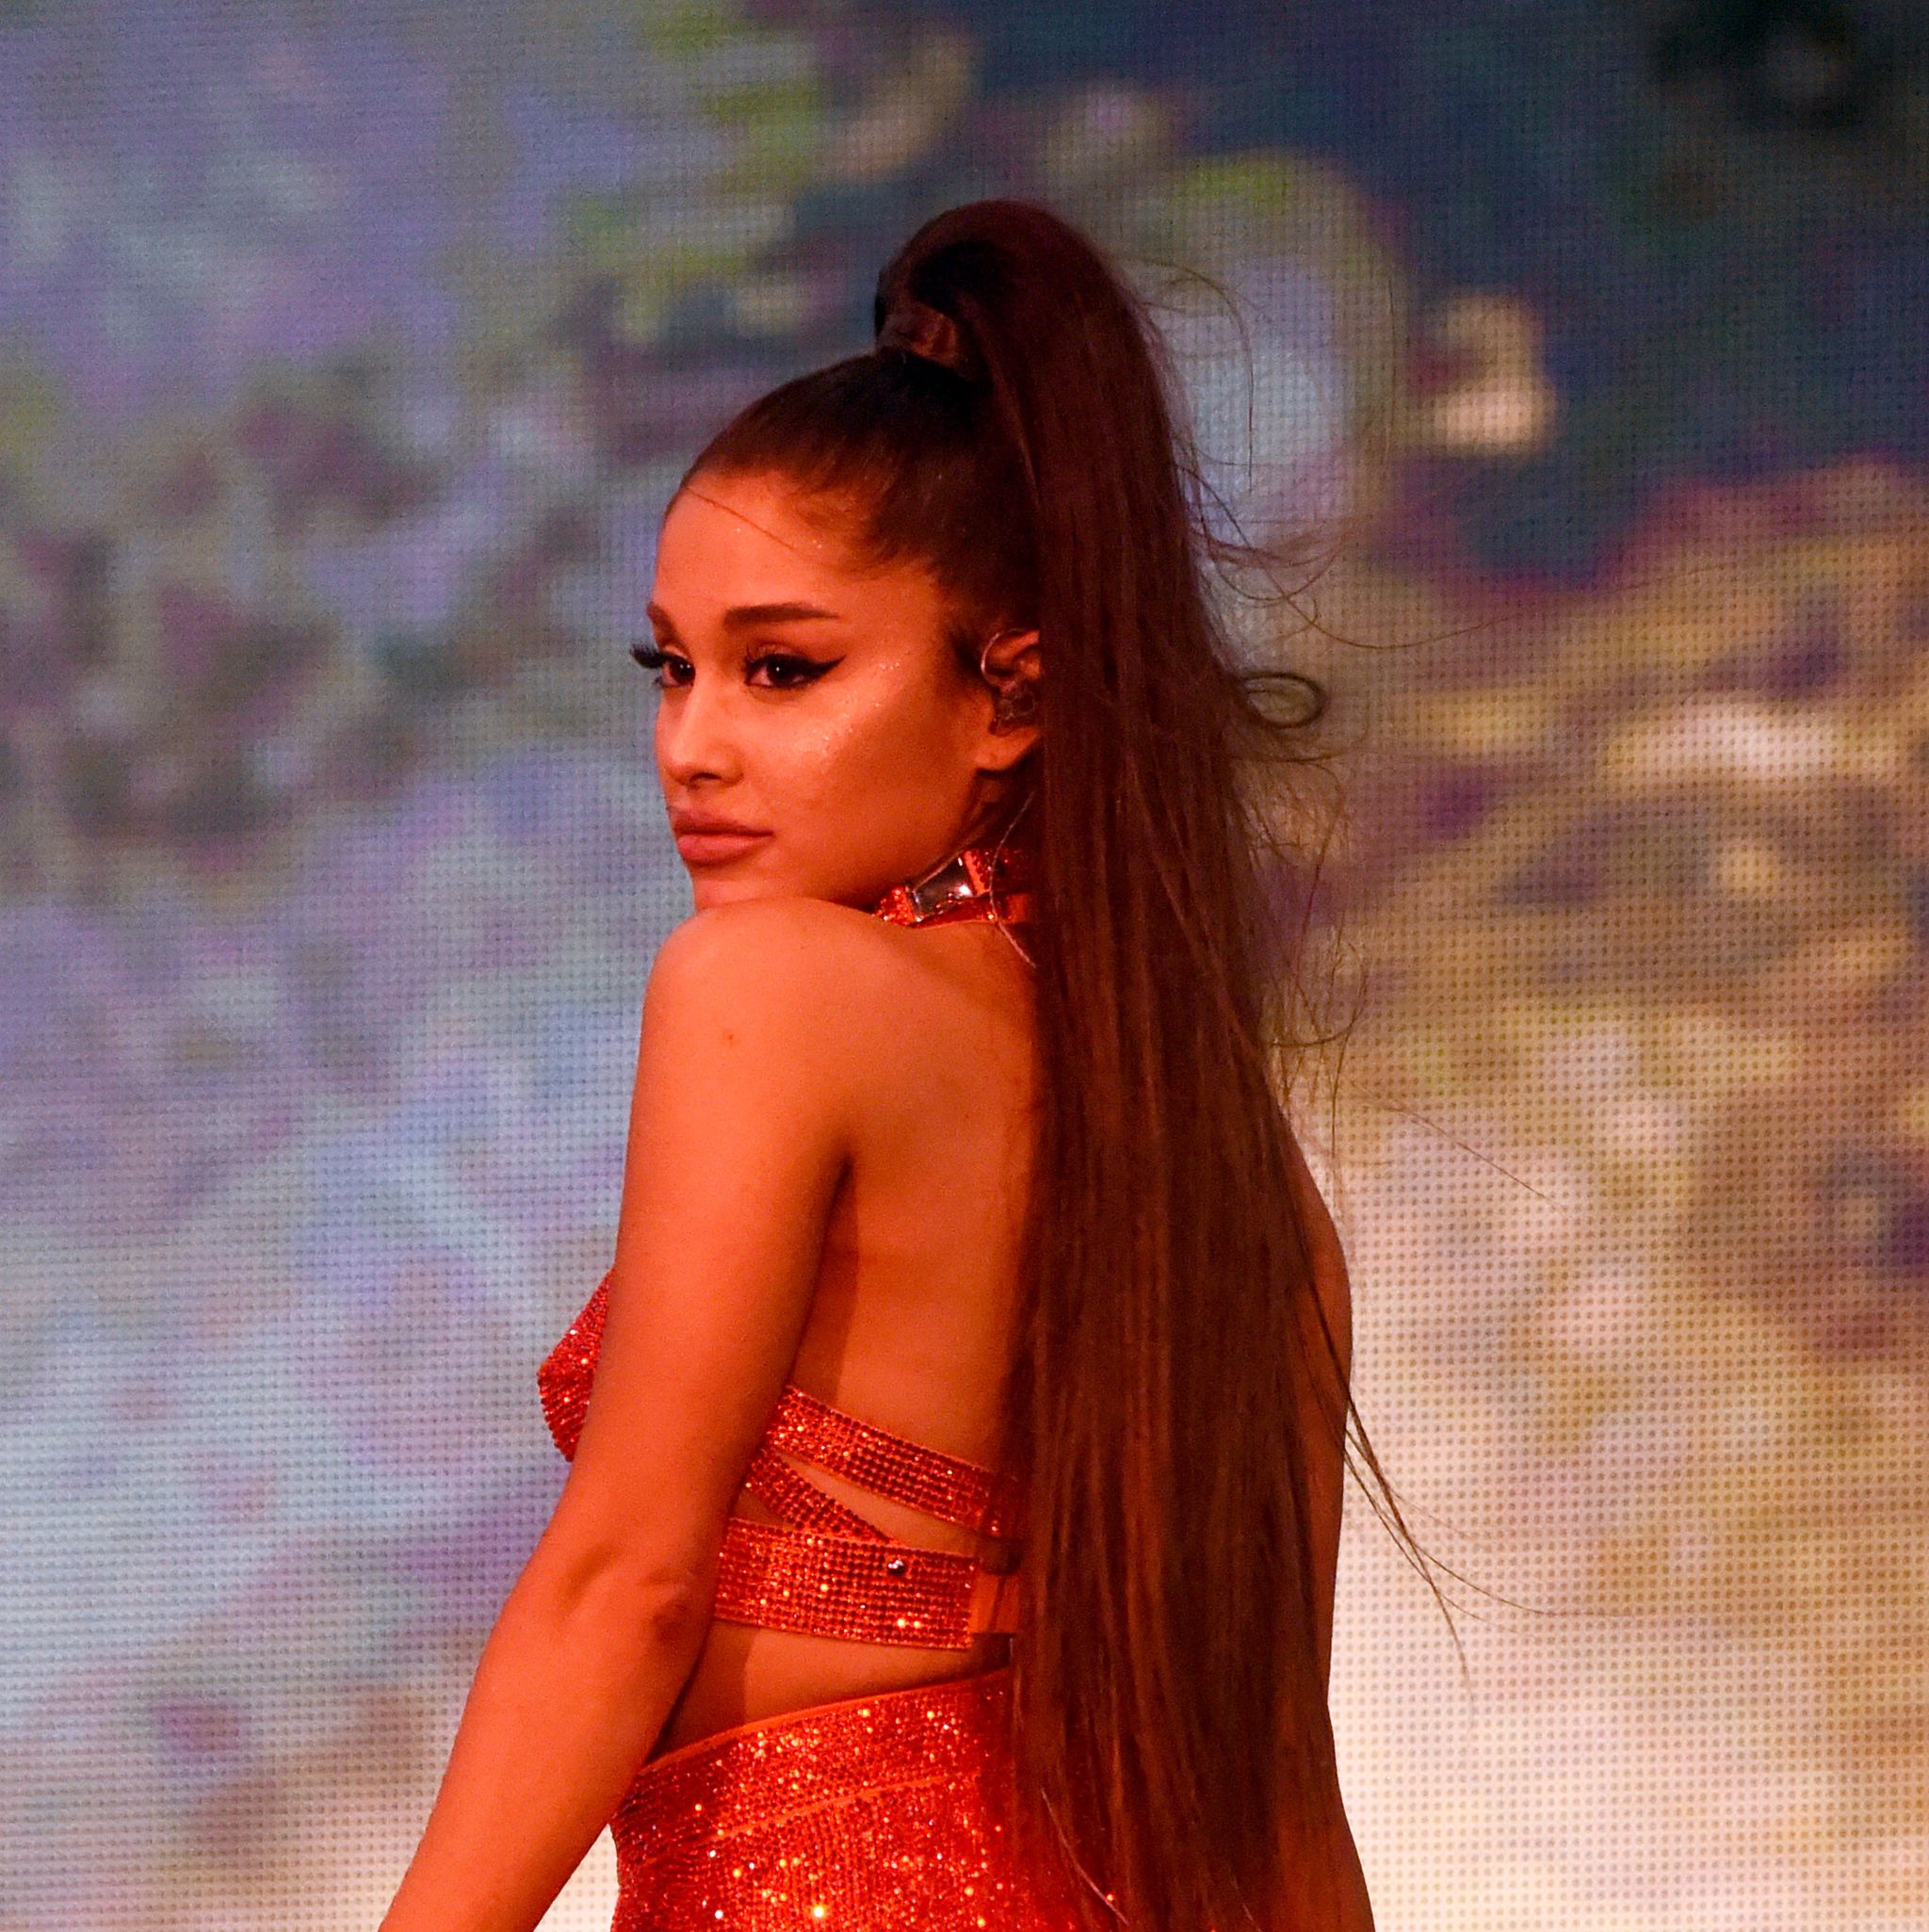 Ariana Grande Cuts Her Ponytail in 'Thank U, Next' Perfume Ad